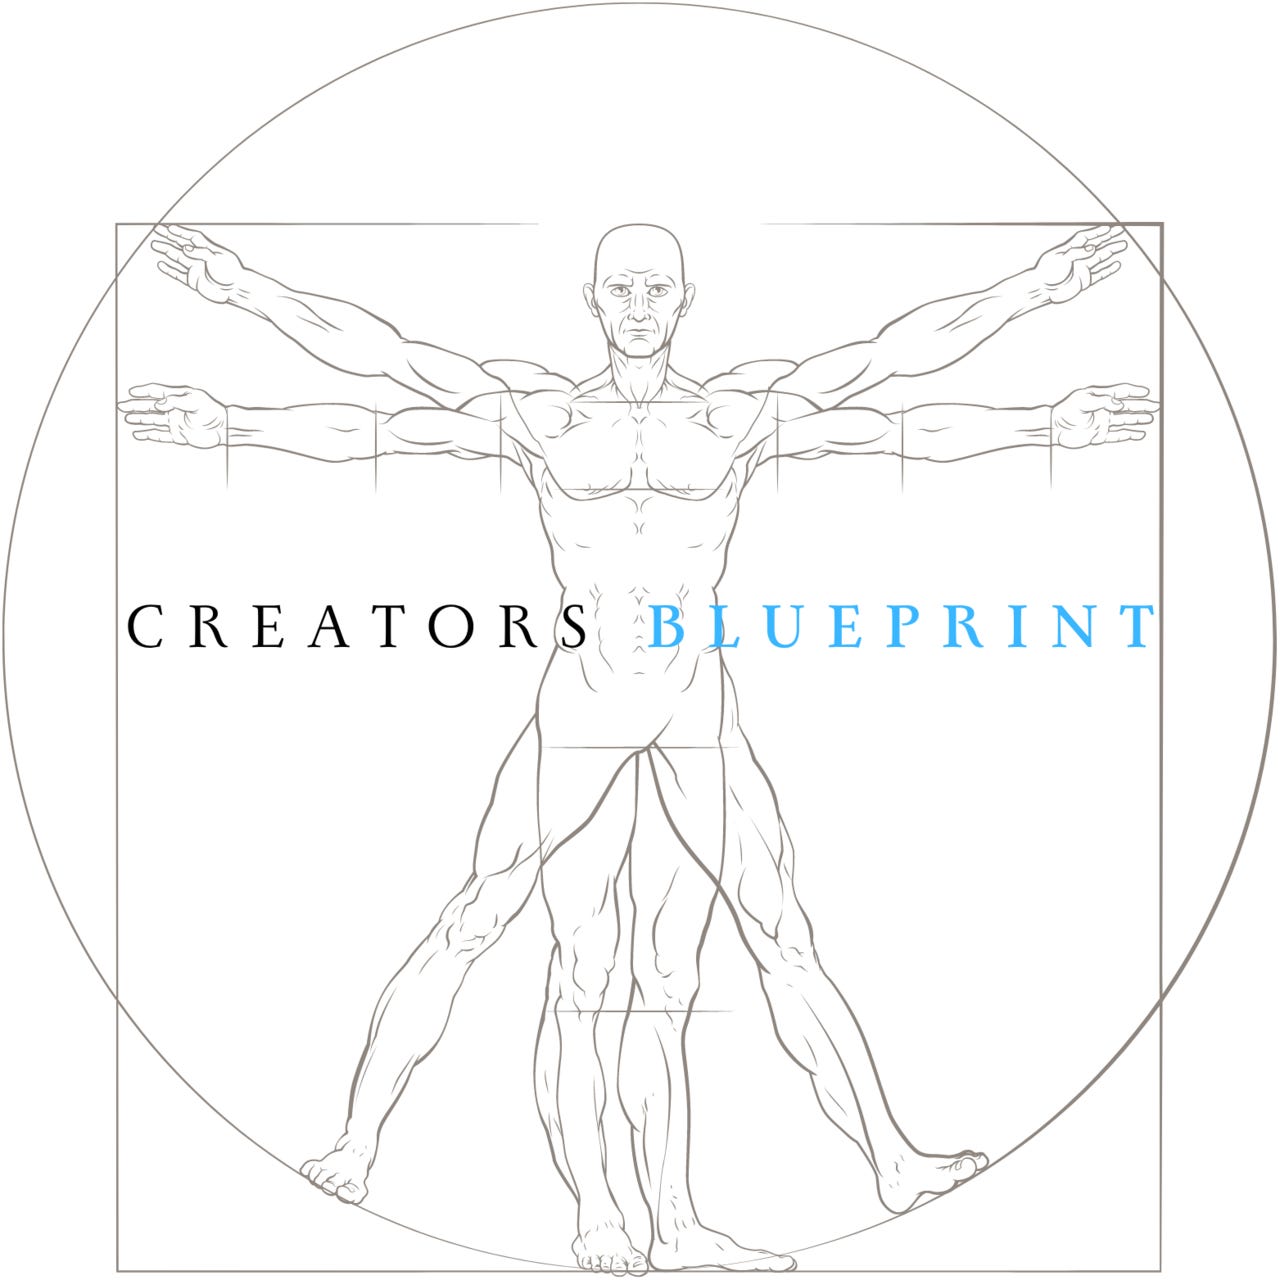 The Creators Blueprint